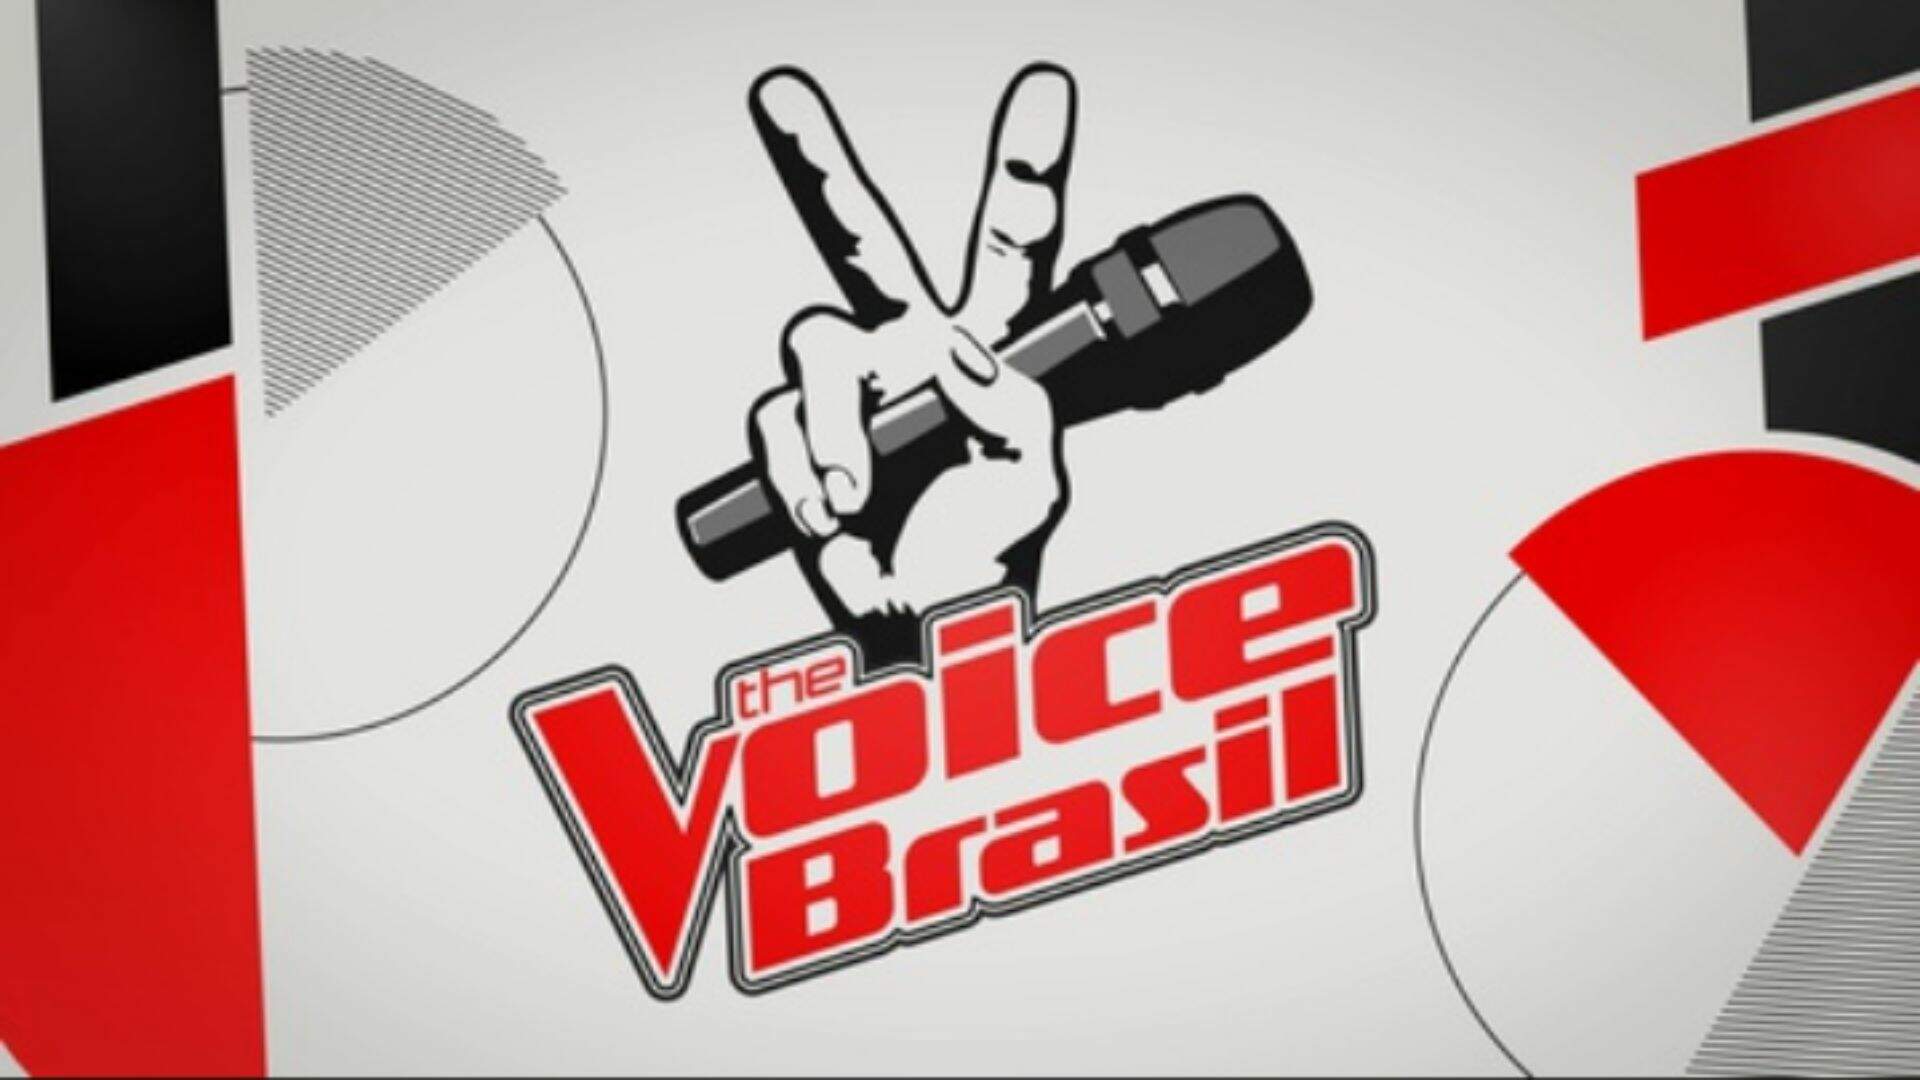 The voice brasil